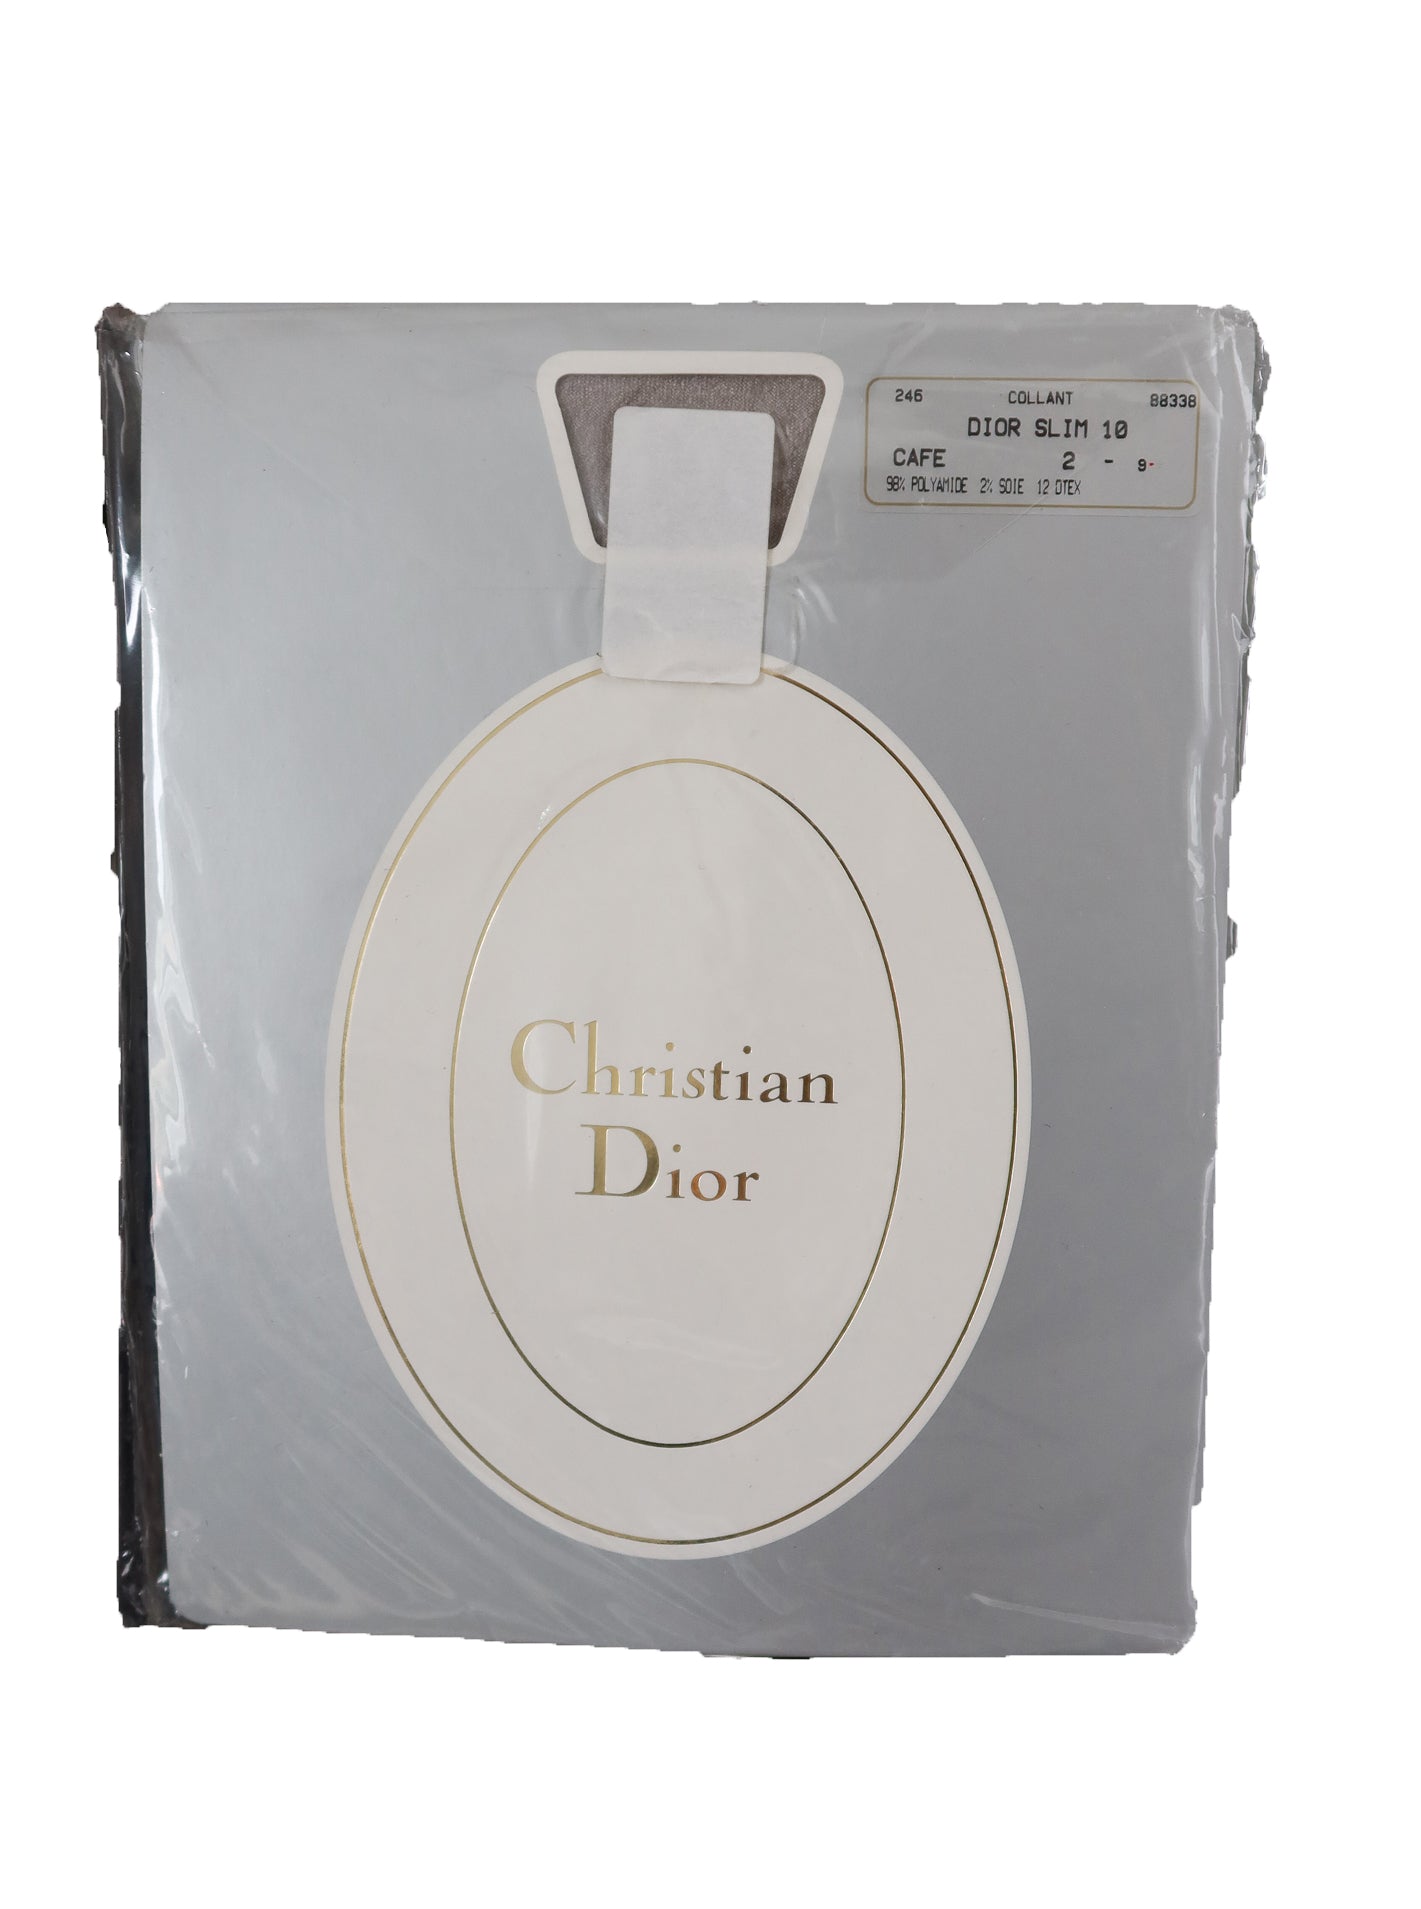 Collant Christian Dior